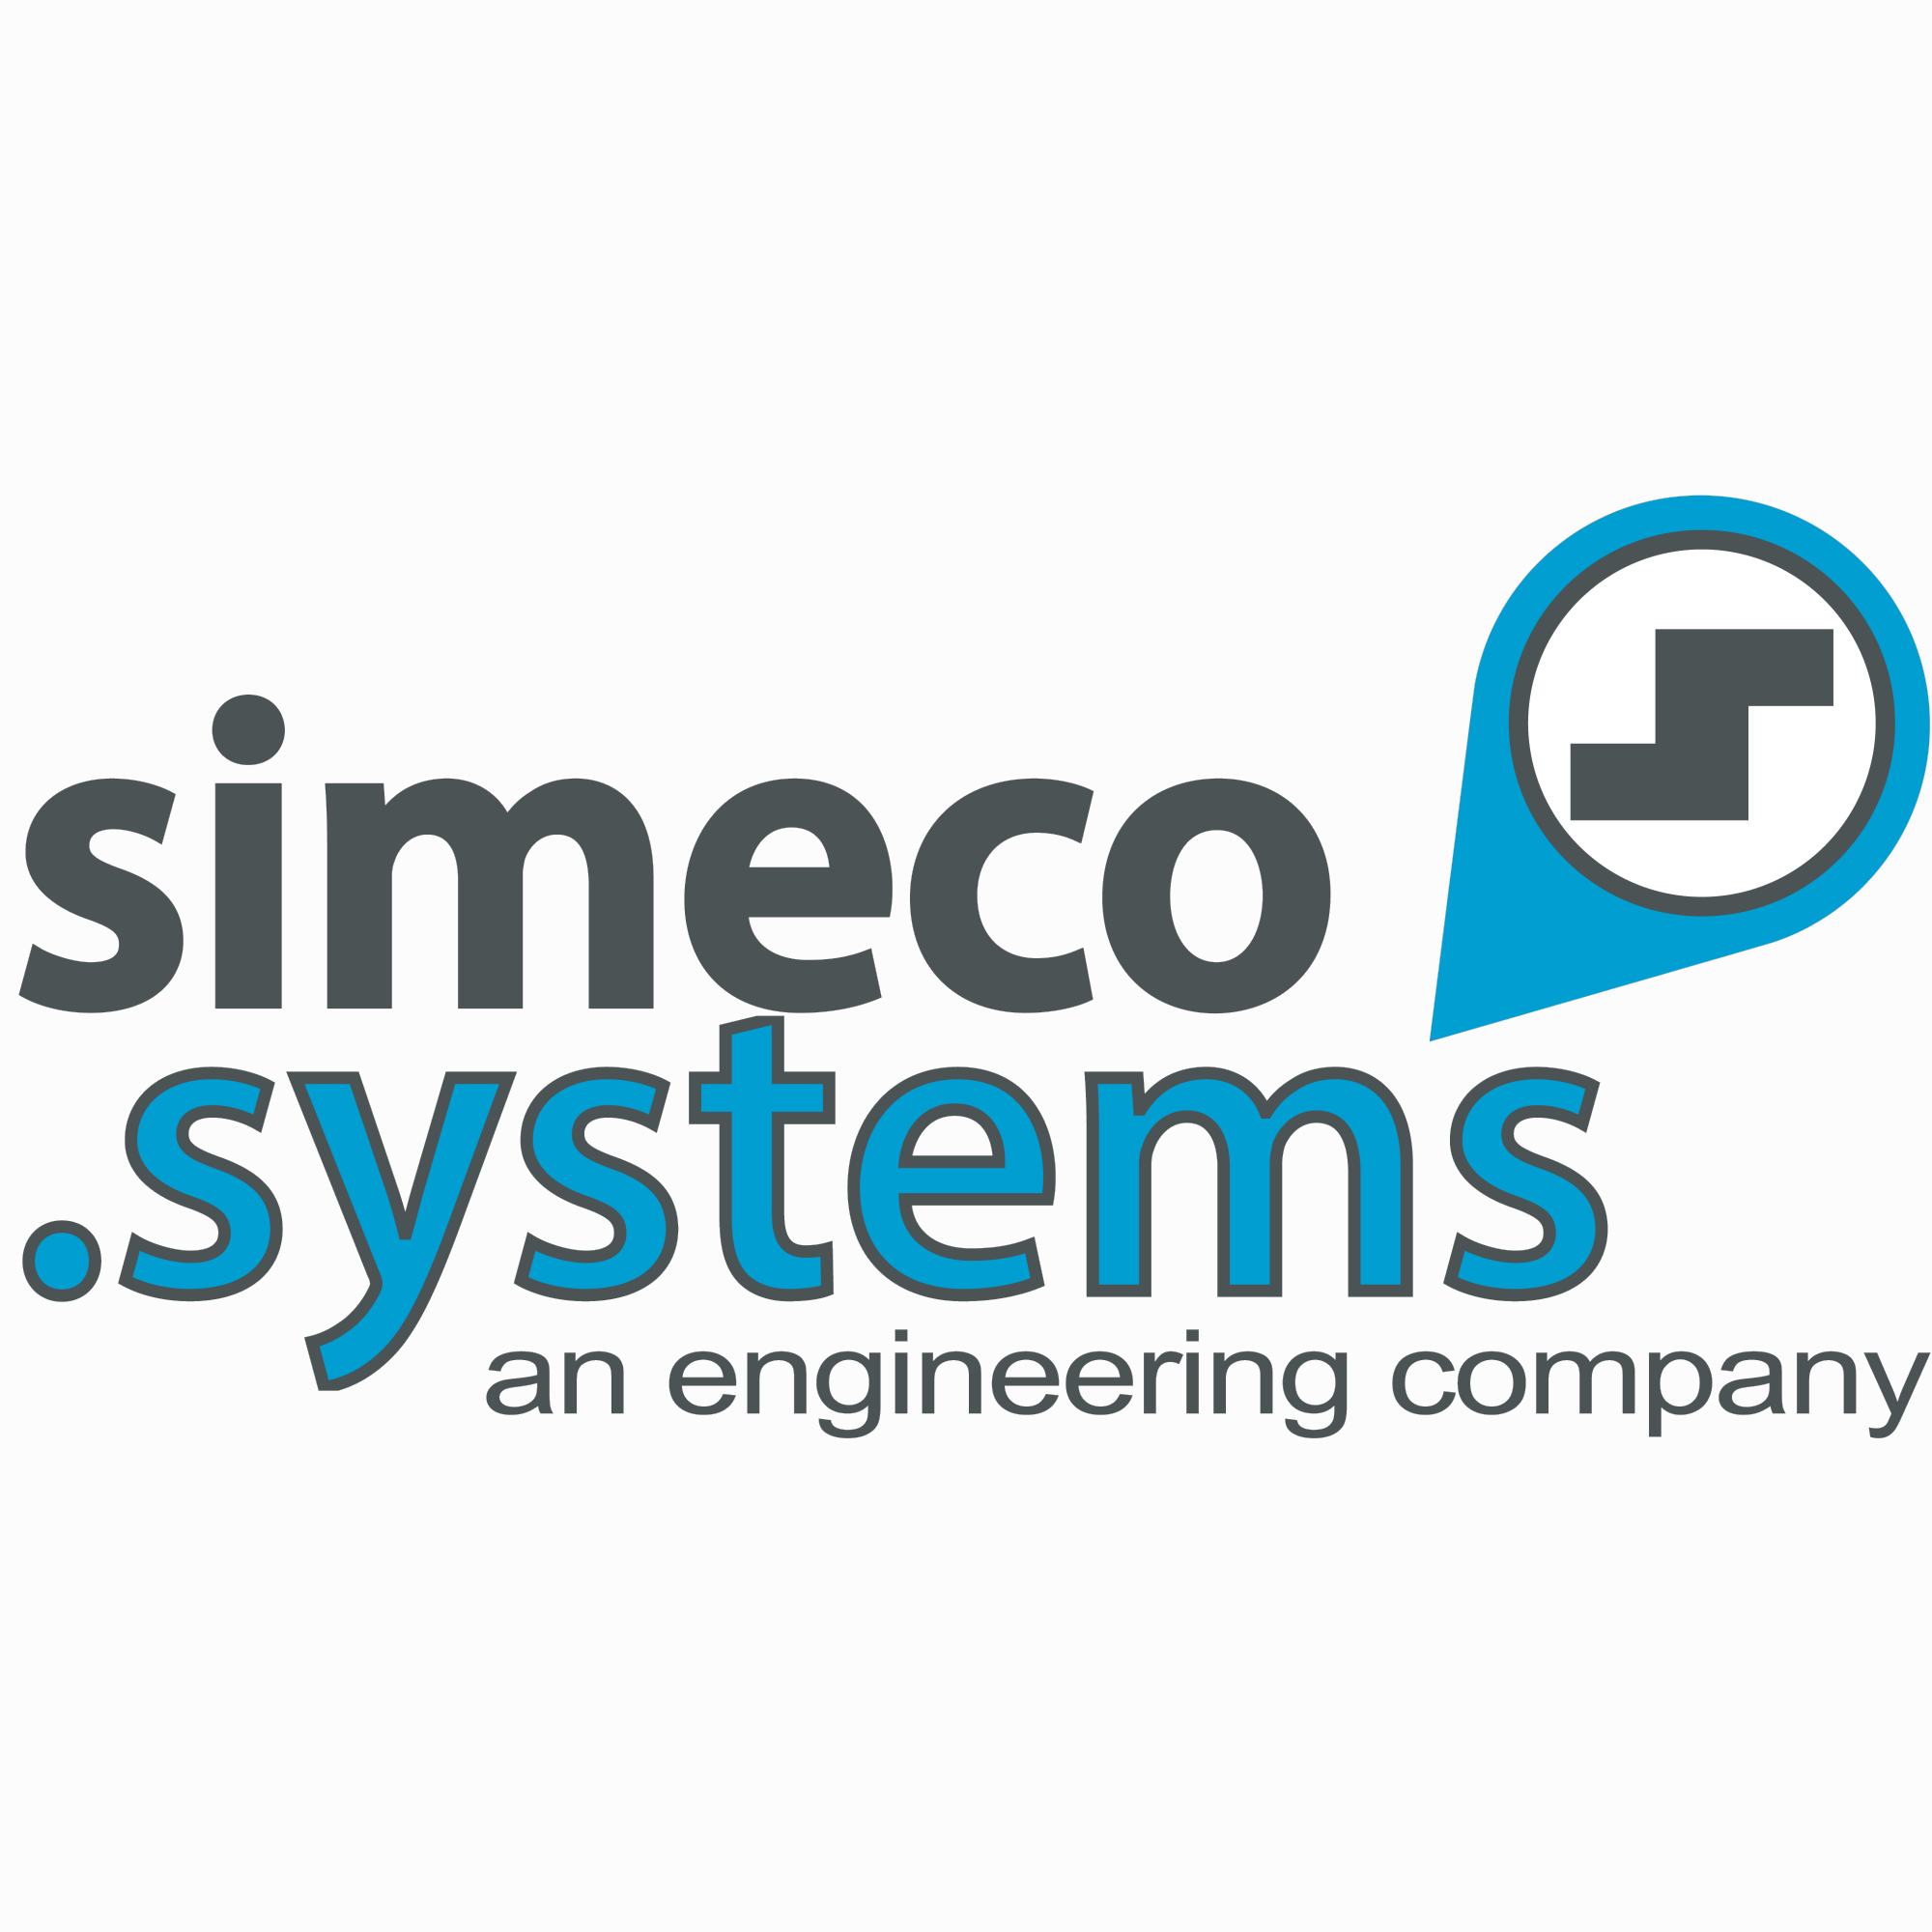 Simeco Systems